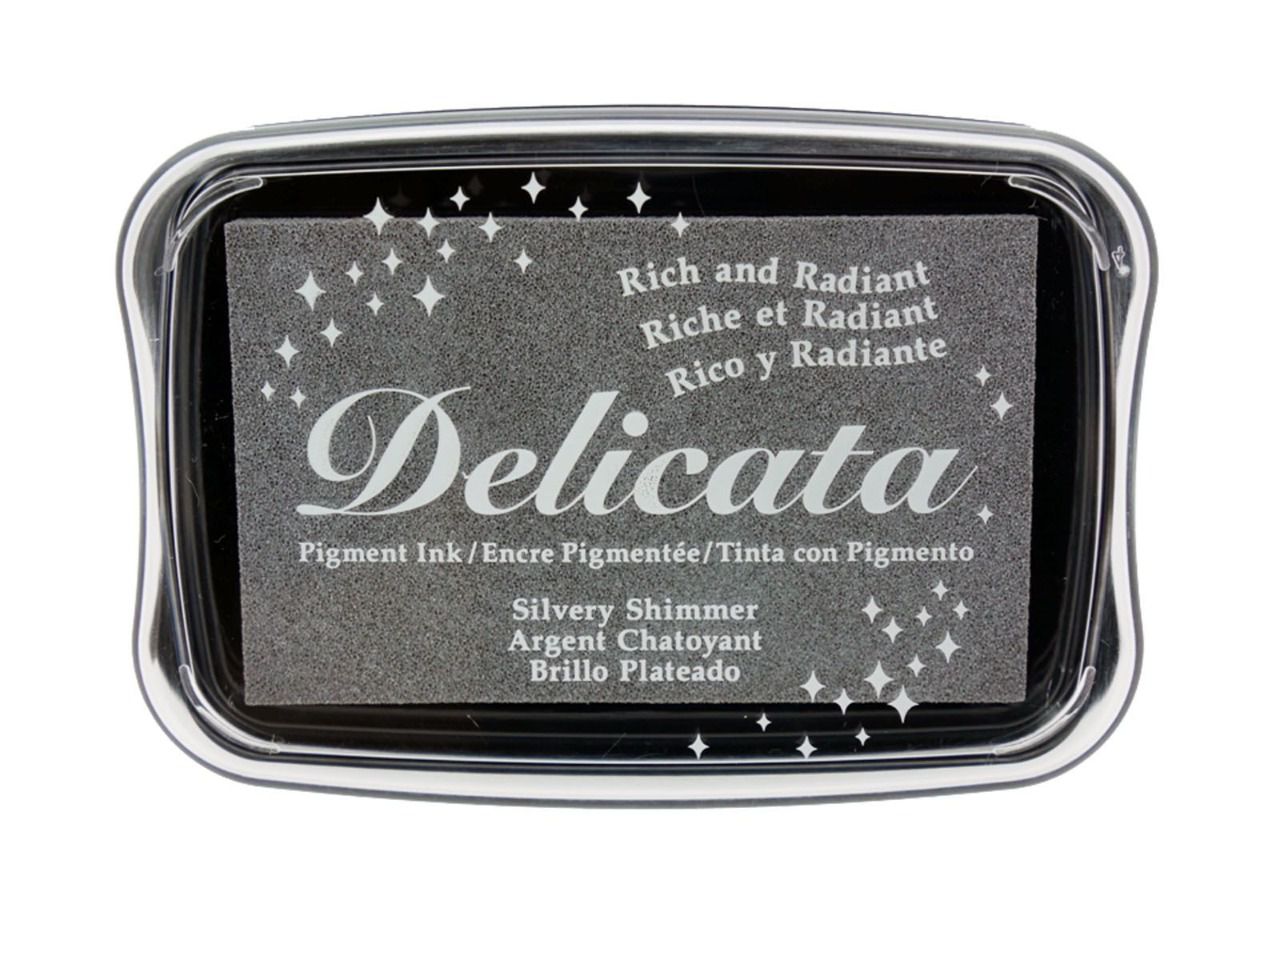 Delicata - Silvery shimmer